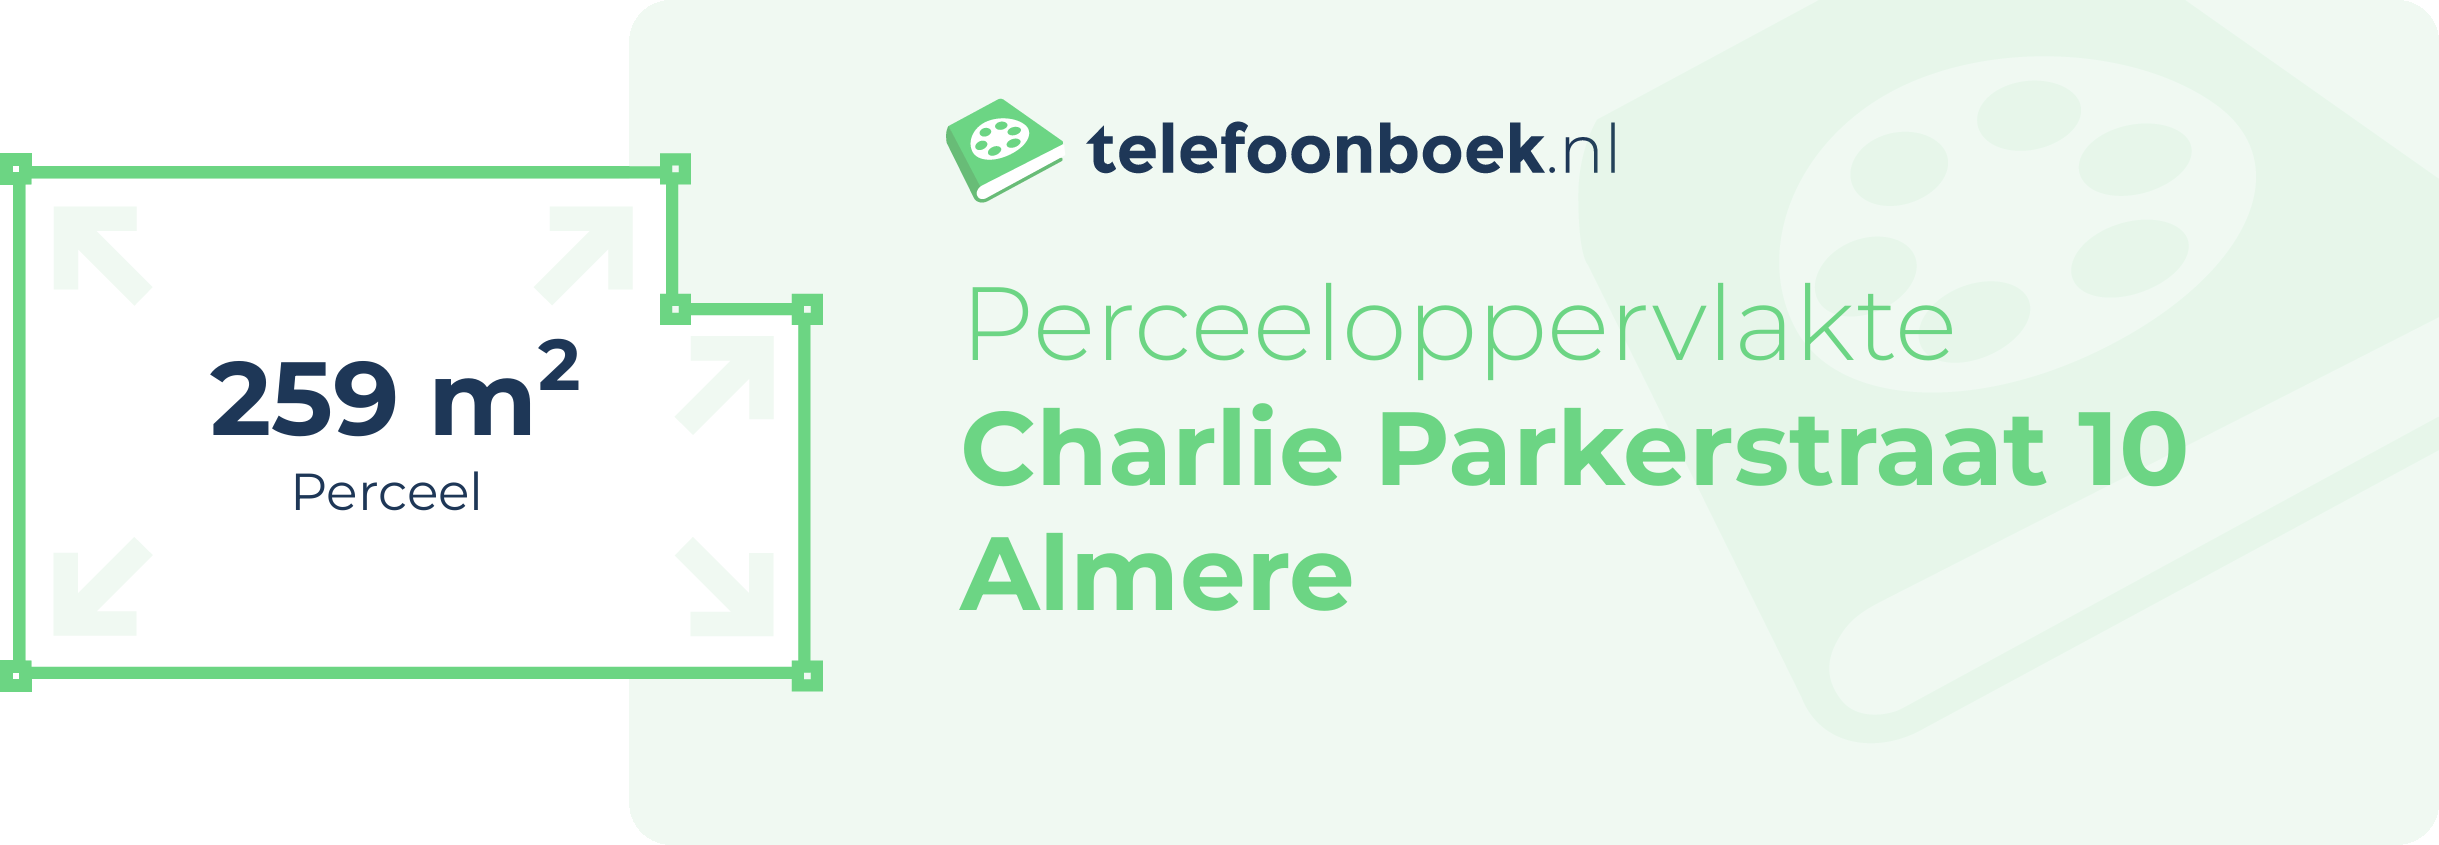 Perceeloppervlakte Charlie Parkerstraat 10 Almere